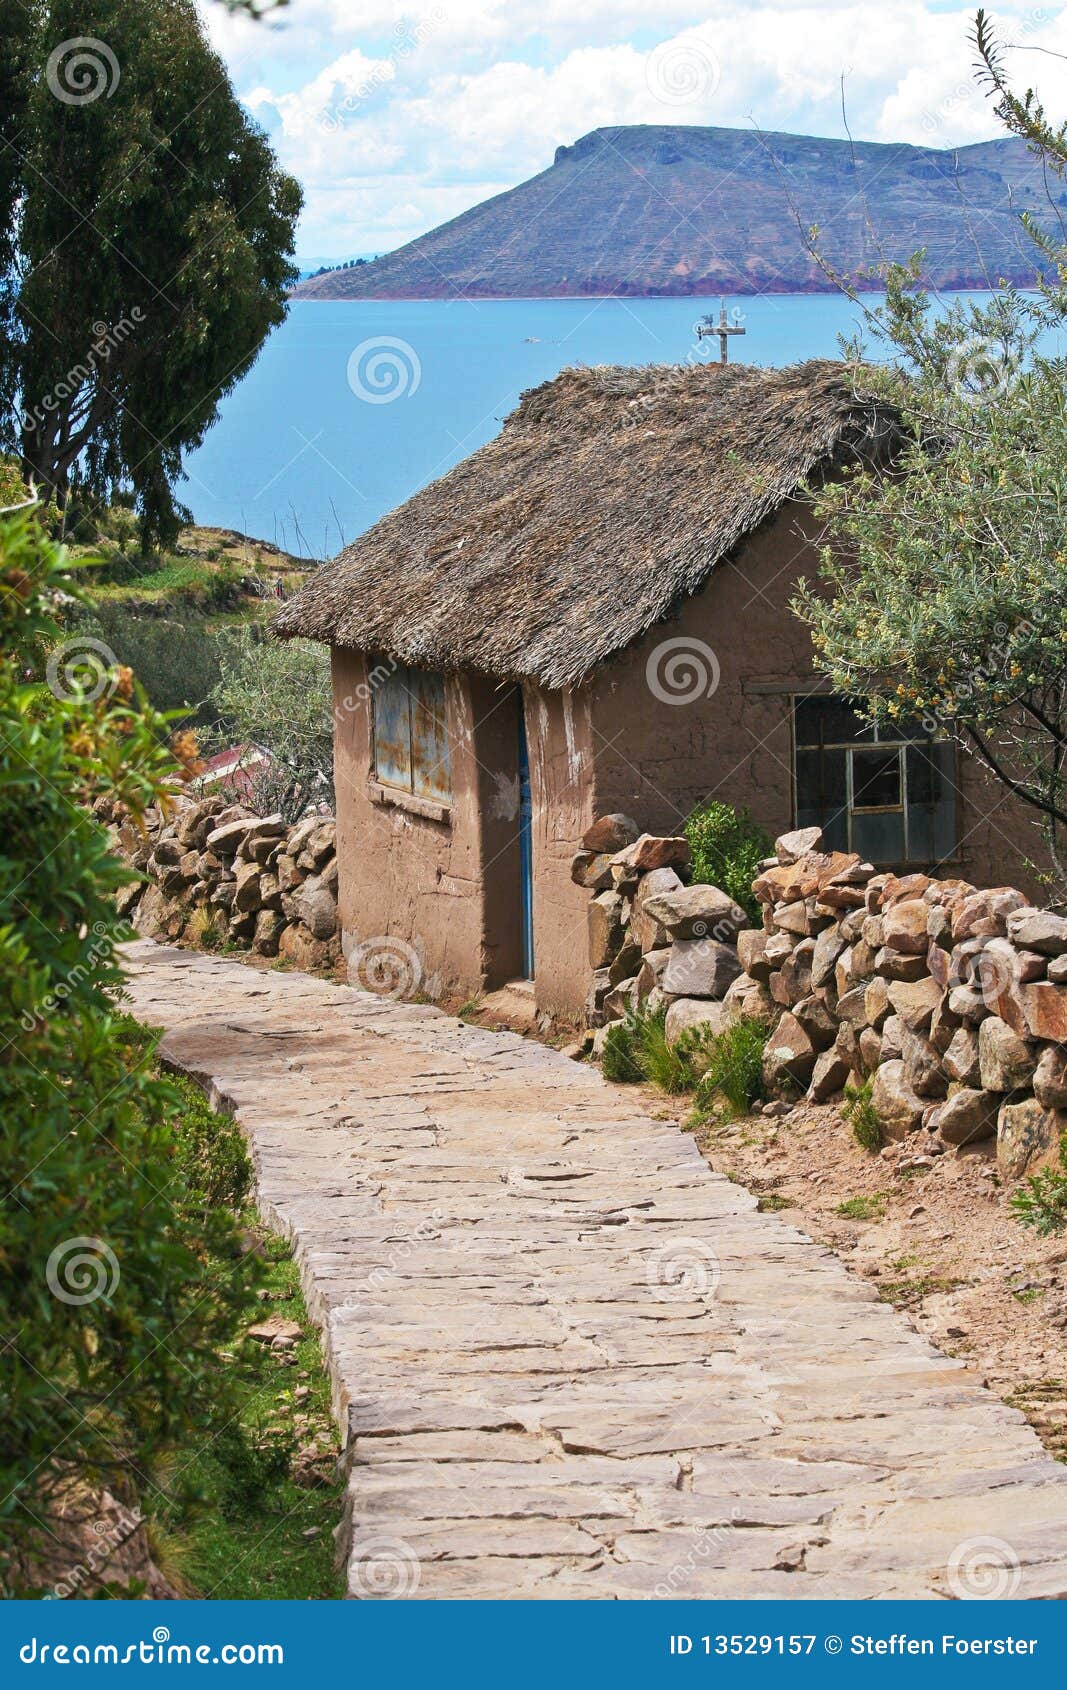 stone path on taquile island in lake titicaca, per